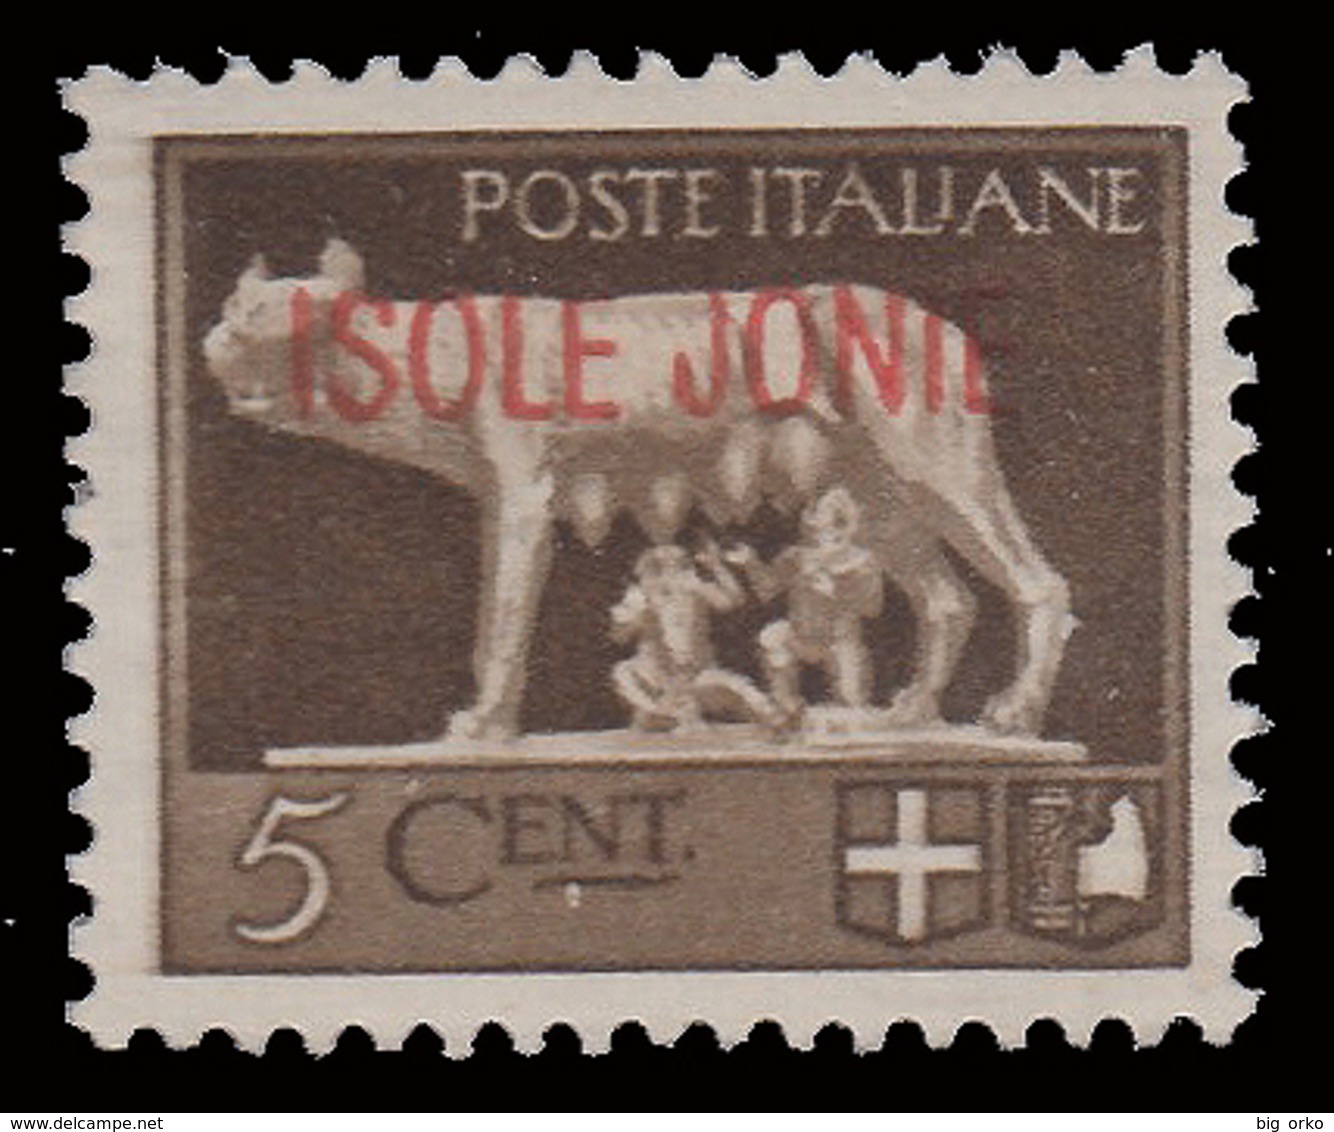 ITALIA - ISOLE JONIE (Emissioni Generali) - 5 C. Bruno - 1941 - Ionische Inseln